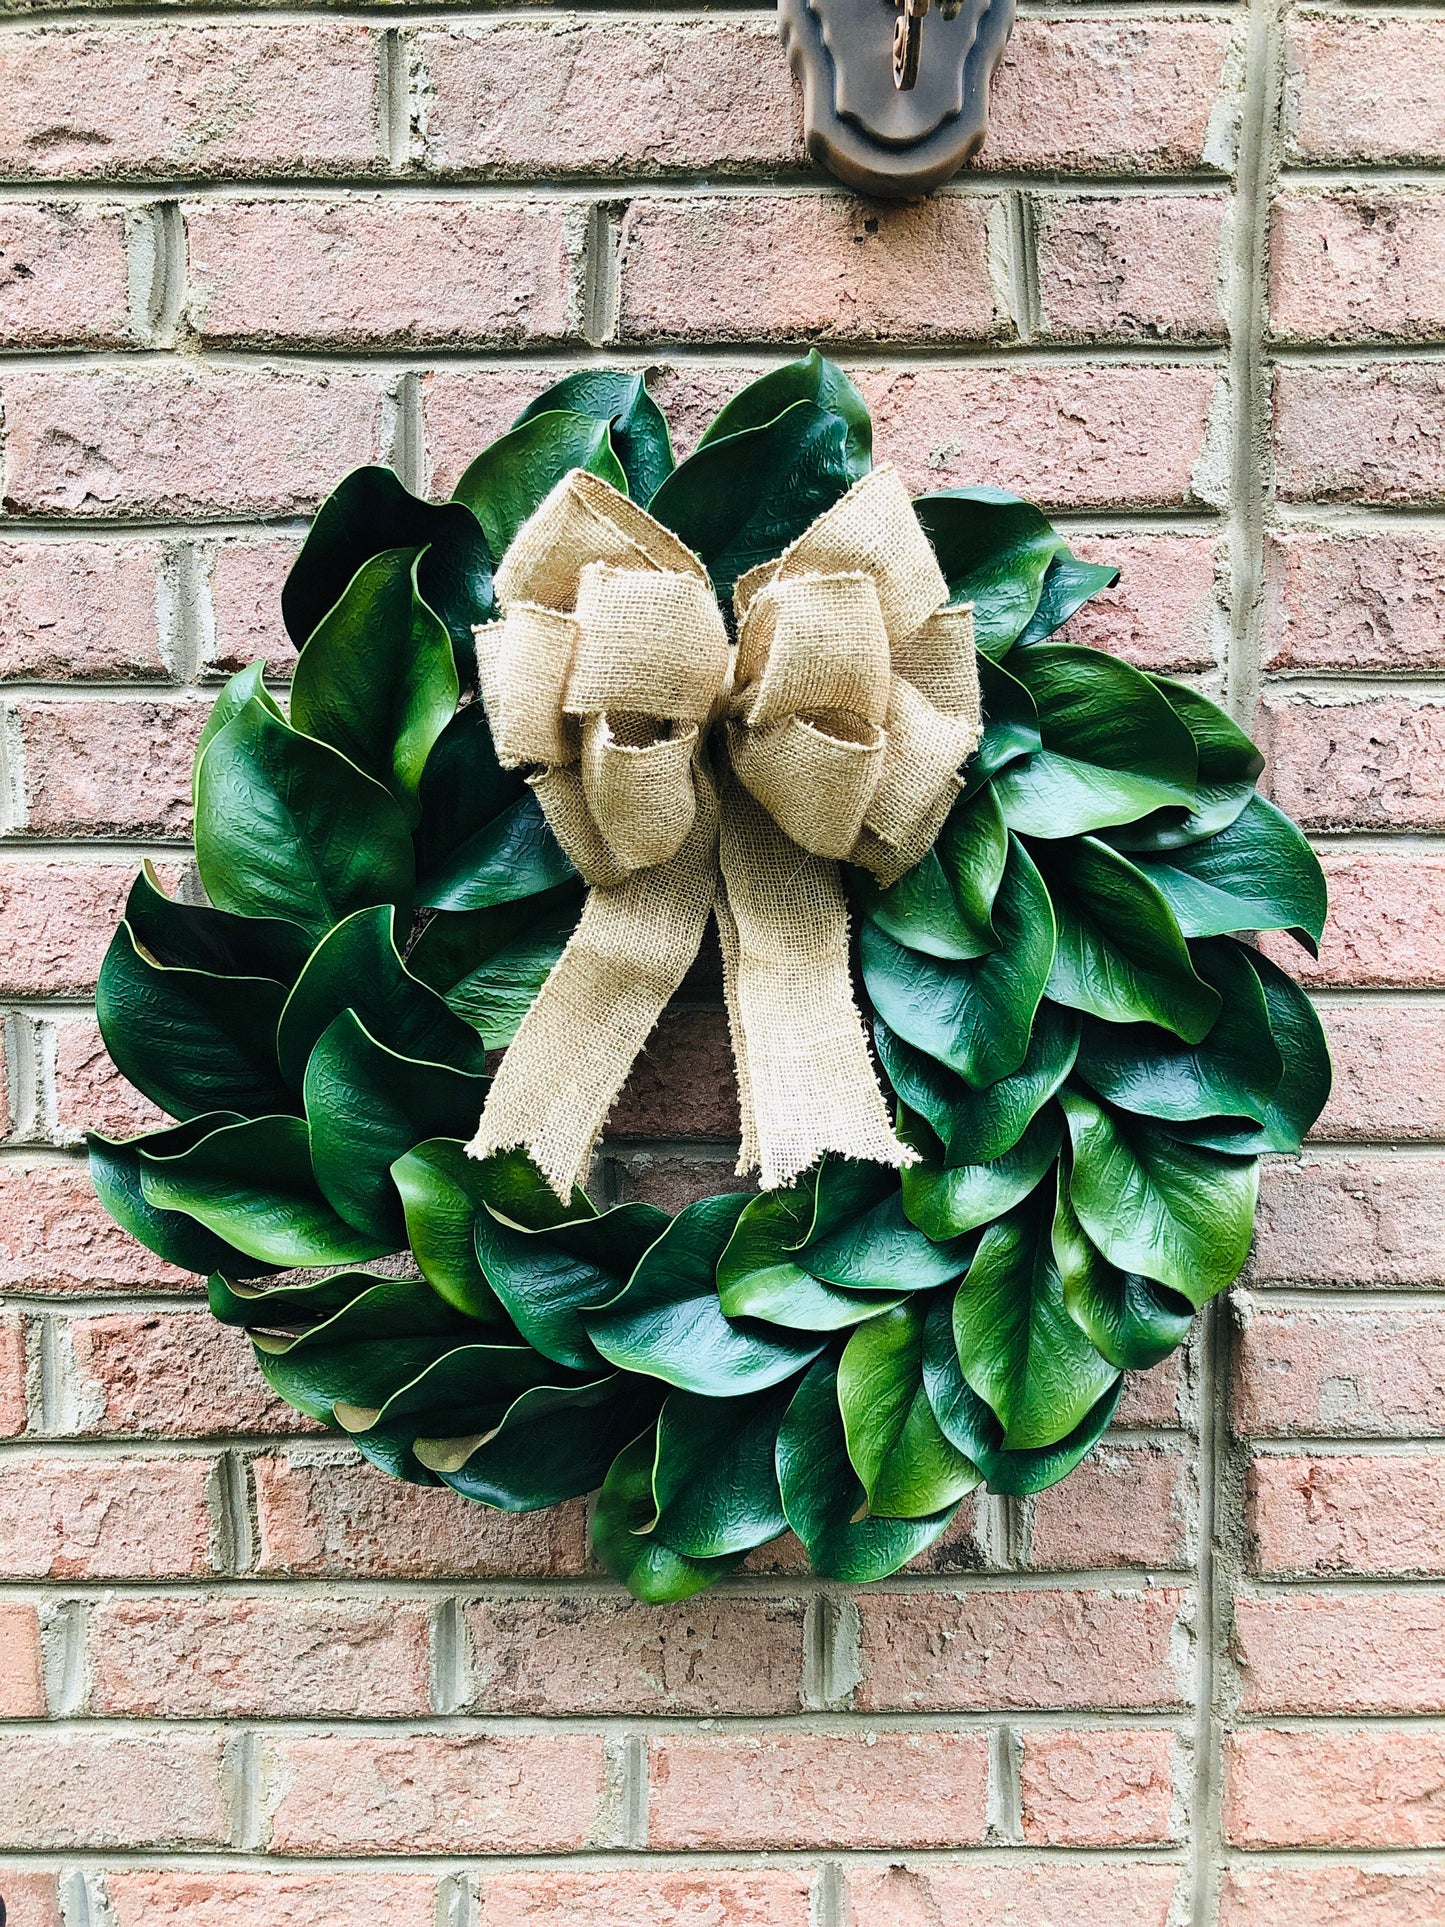 MAGNOLIA Wreath, Large 23-25" Magnolia leaf door wreath, Housewarming wreath, Front door Farmhouse wreath,wedding gift, Wreath with burlap